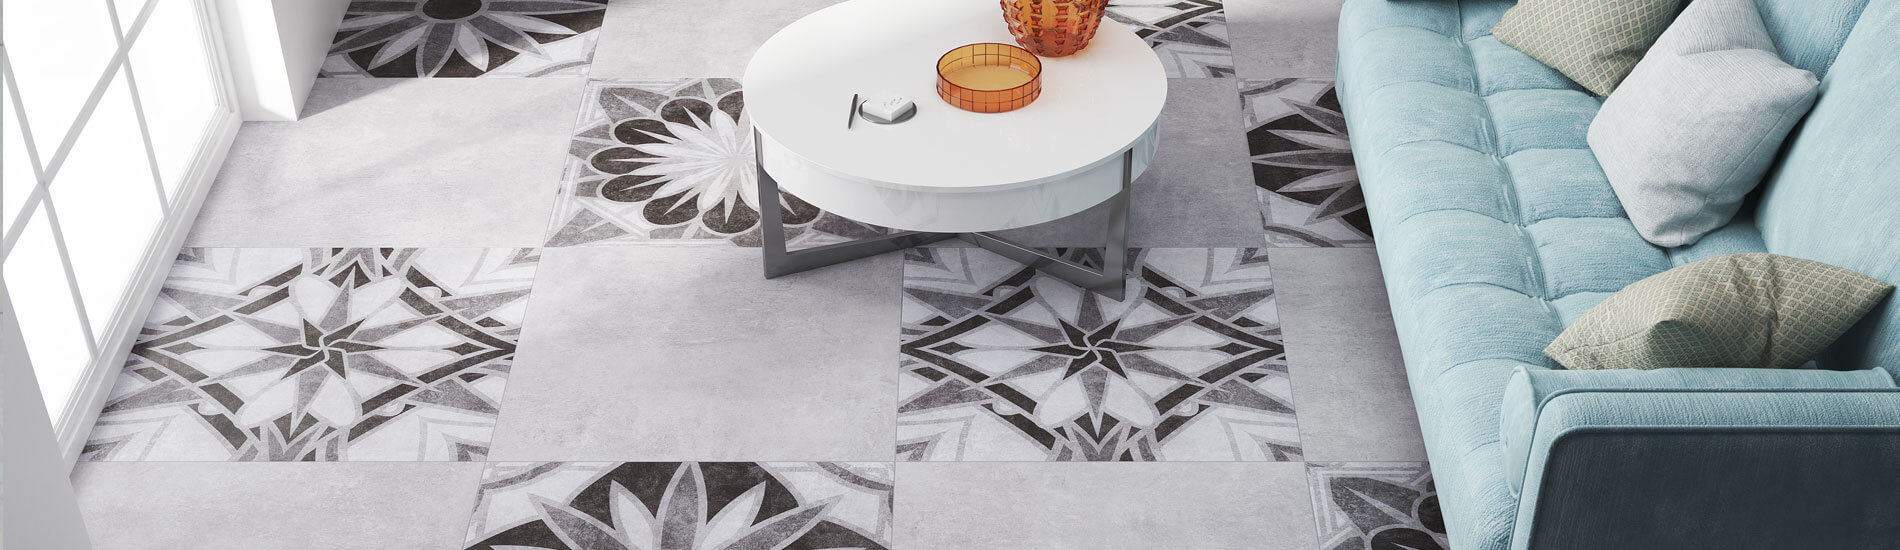 marjan Ceramic model verona 00 - کاشی مرجان مدل ورونا -  - tile-60-60, wall-tiles, bathroom-tiles, ceramic-floor-tiles